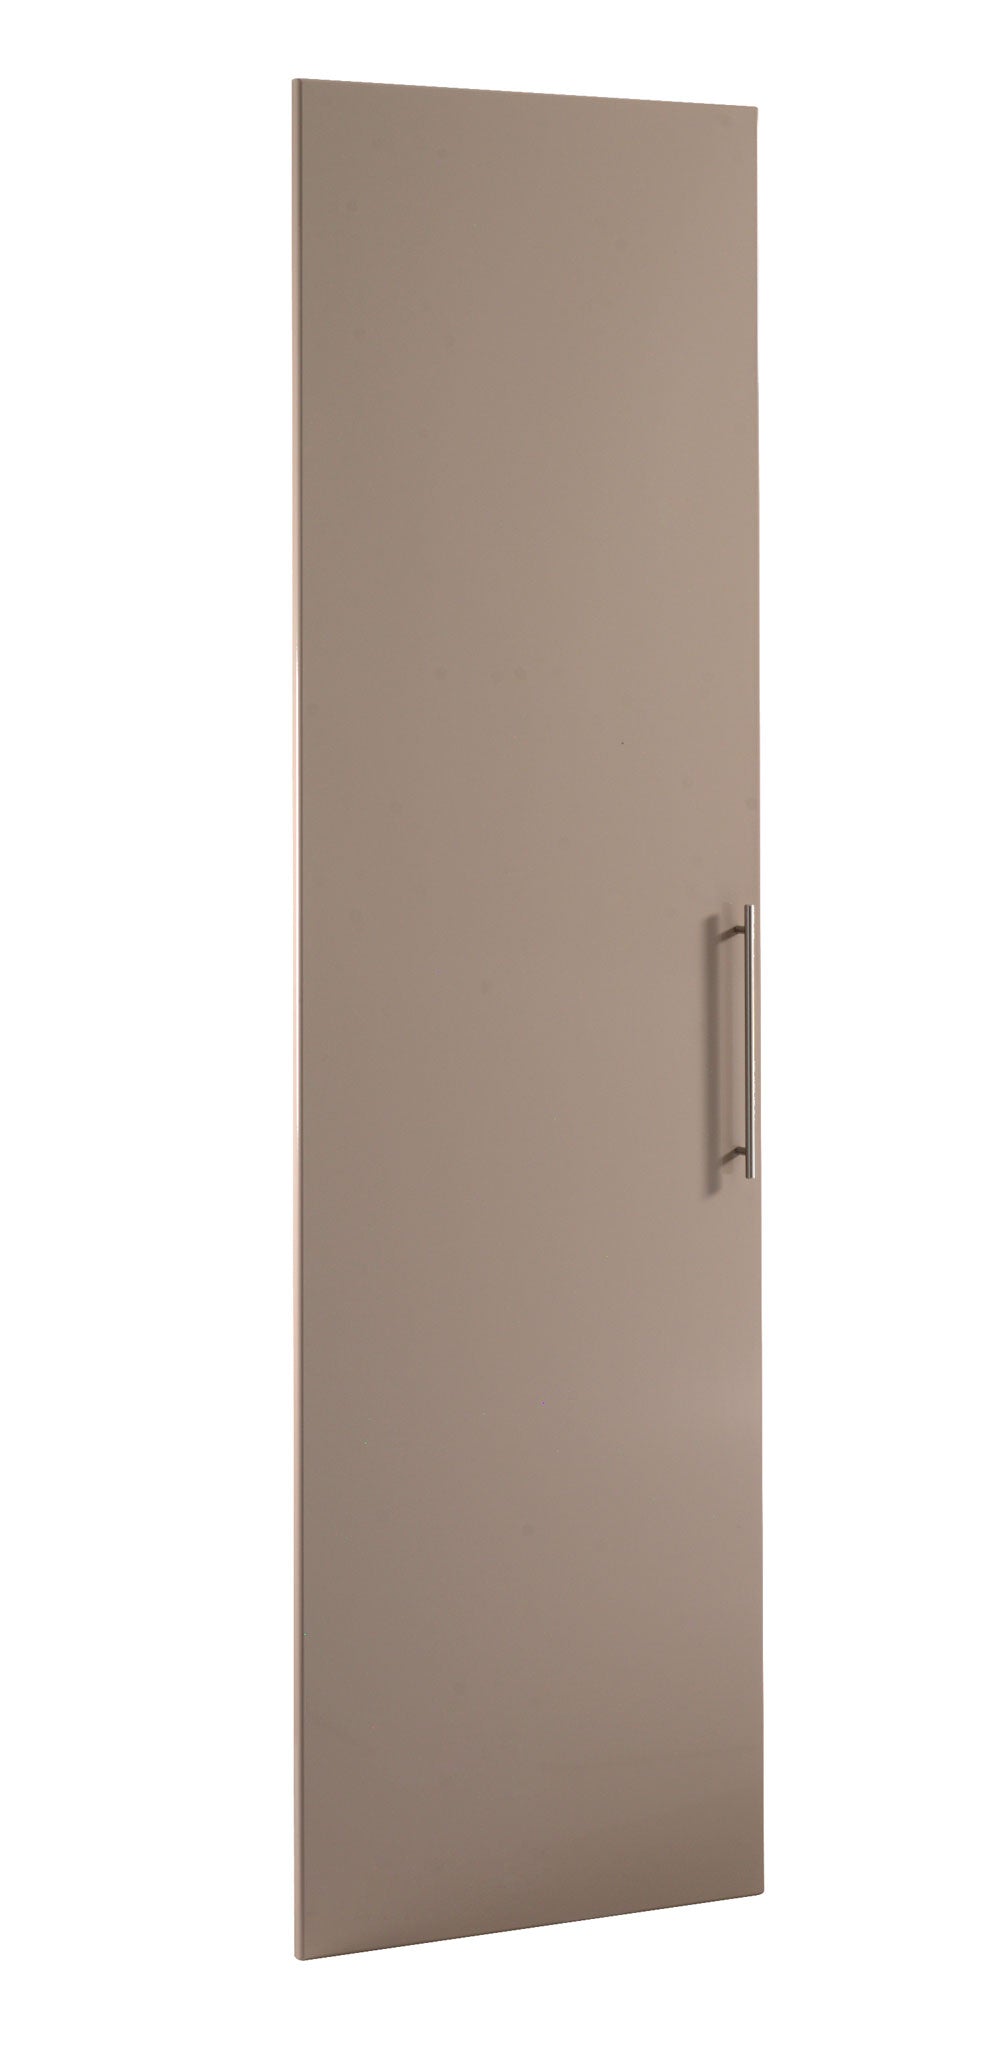 Custom made Manhattan cupboard door in Valspar colour